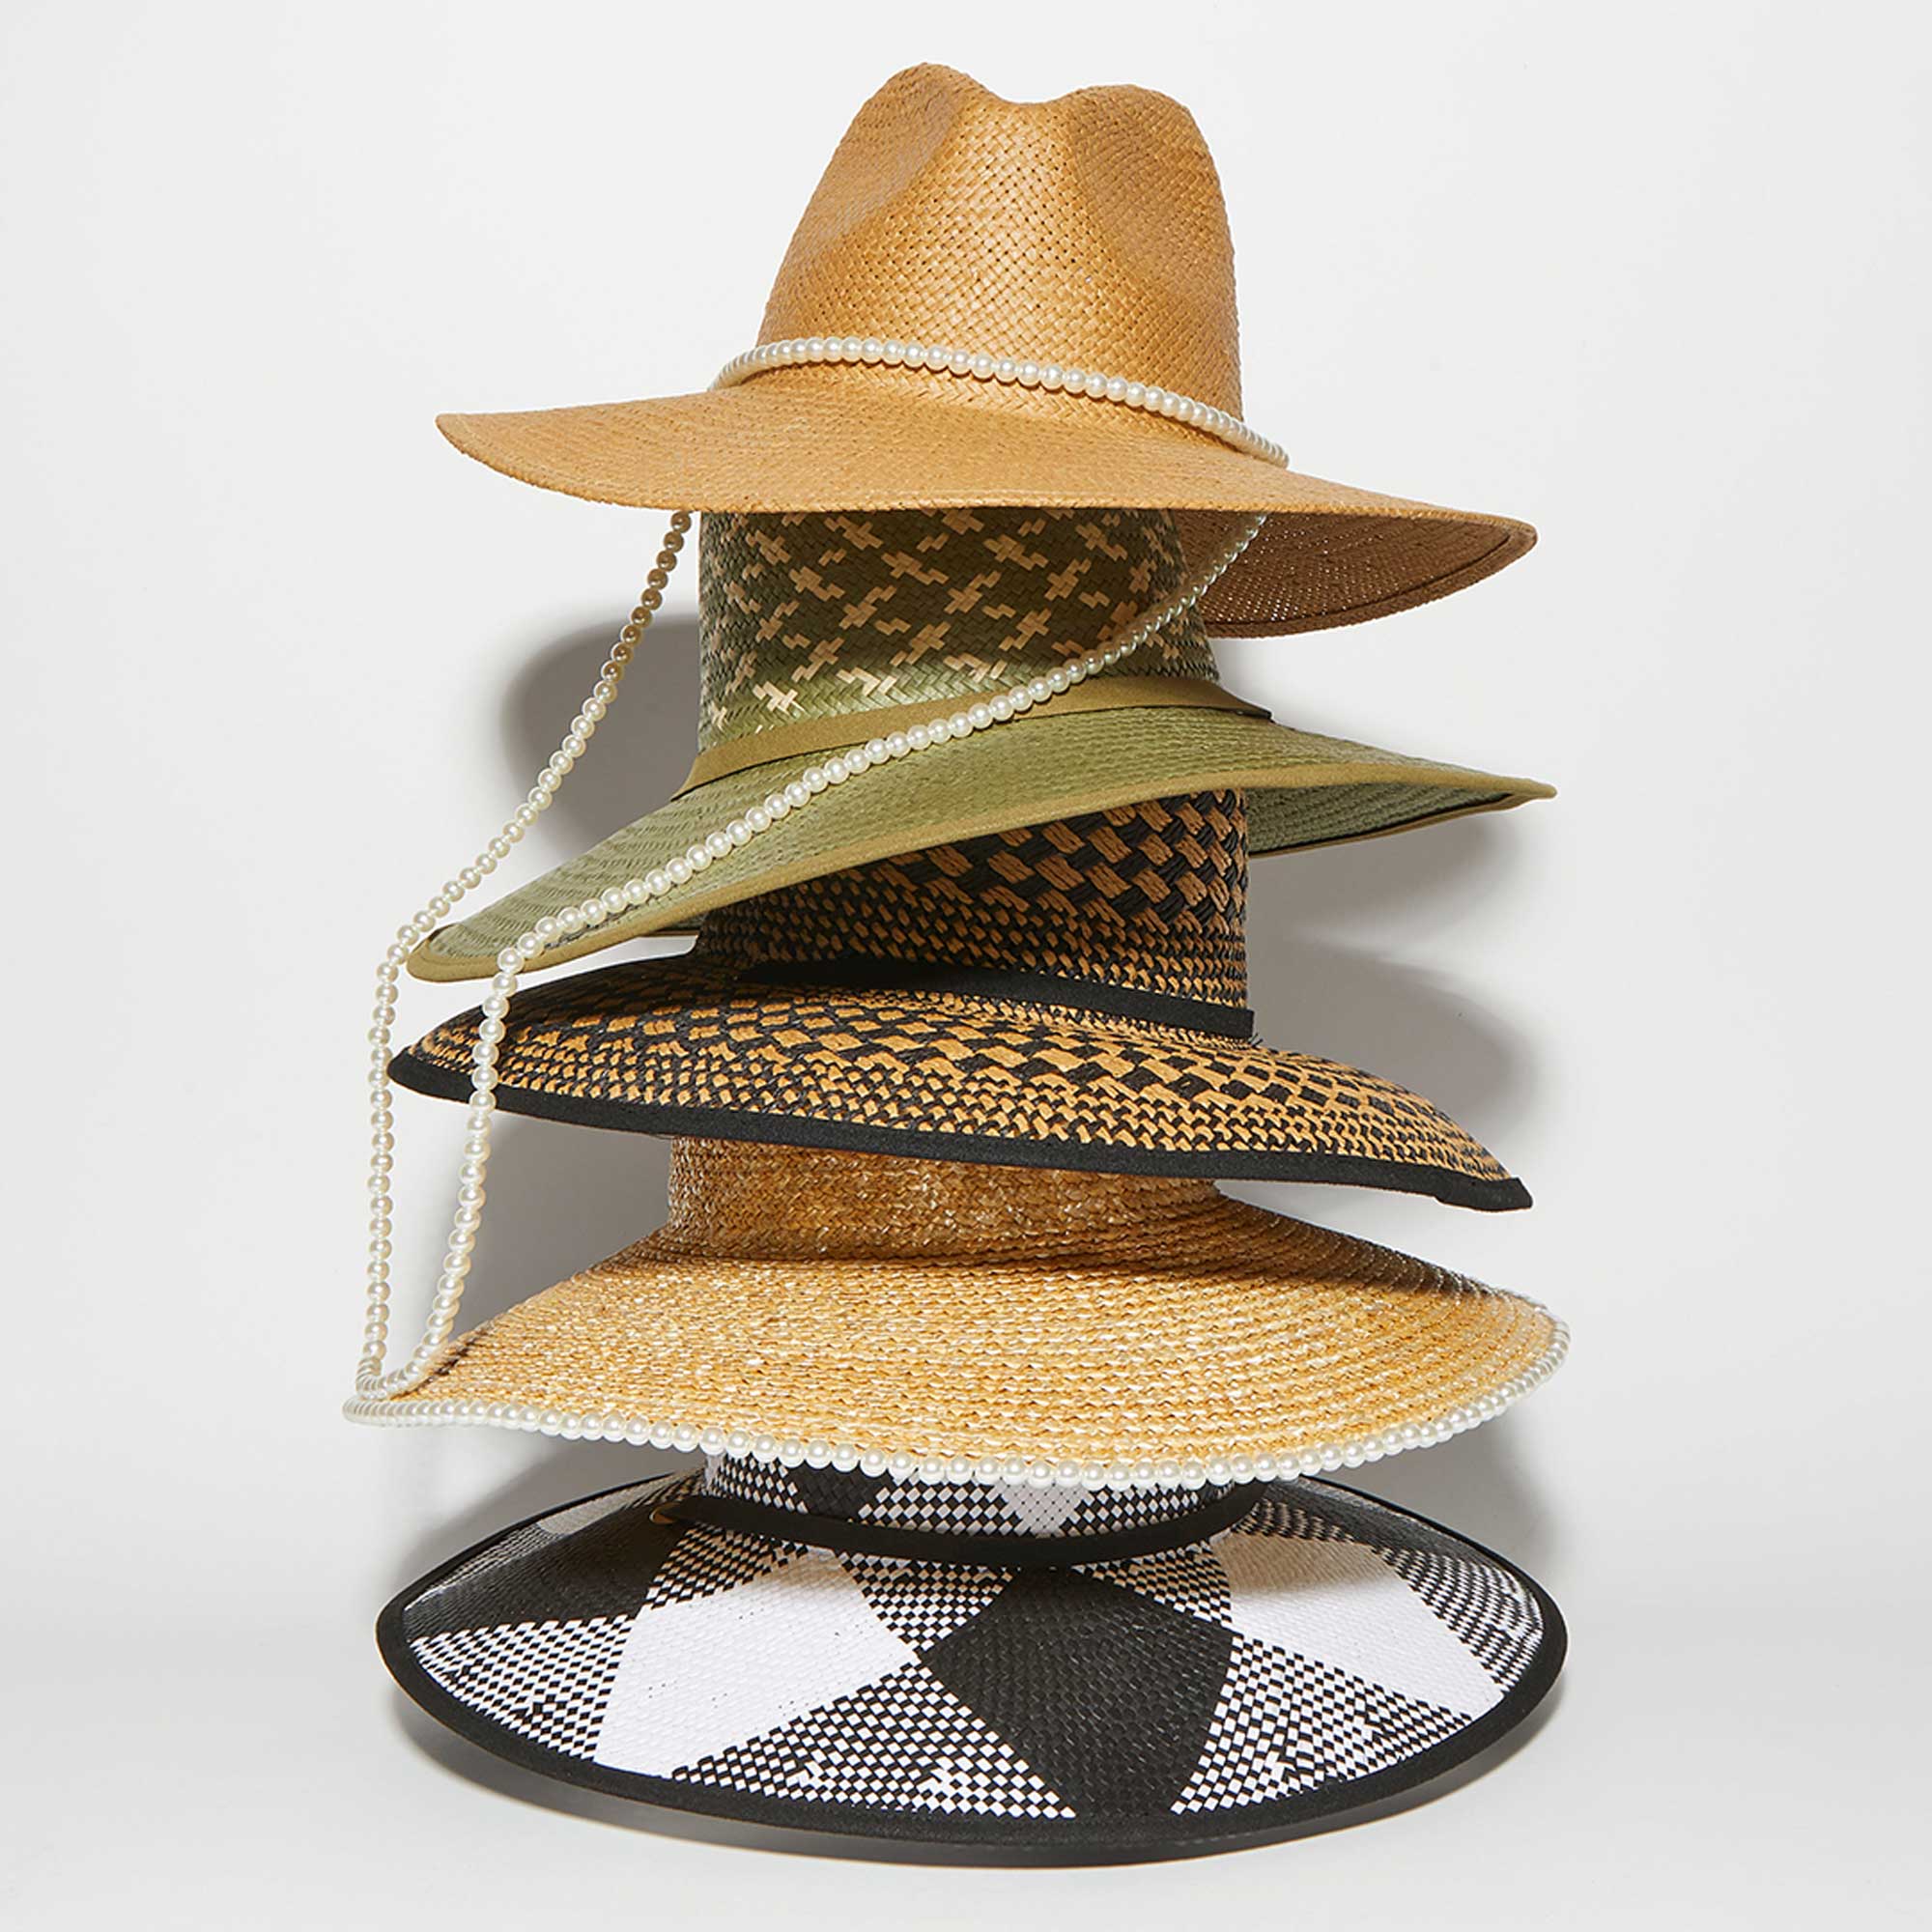 stack of Lele hats